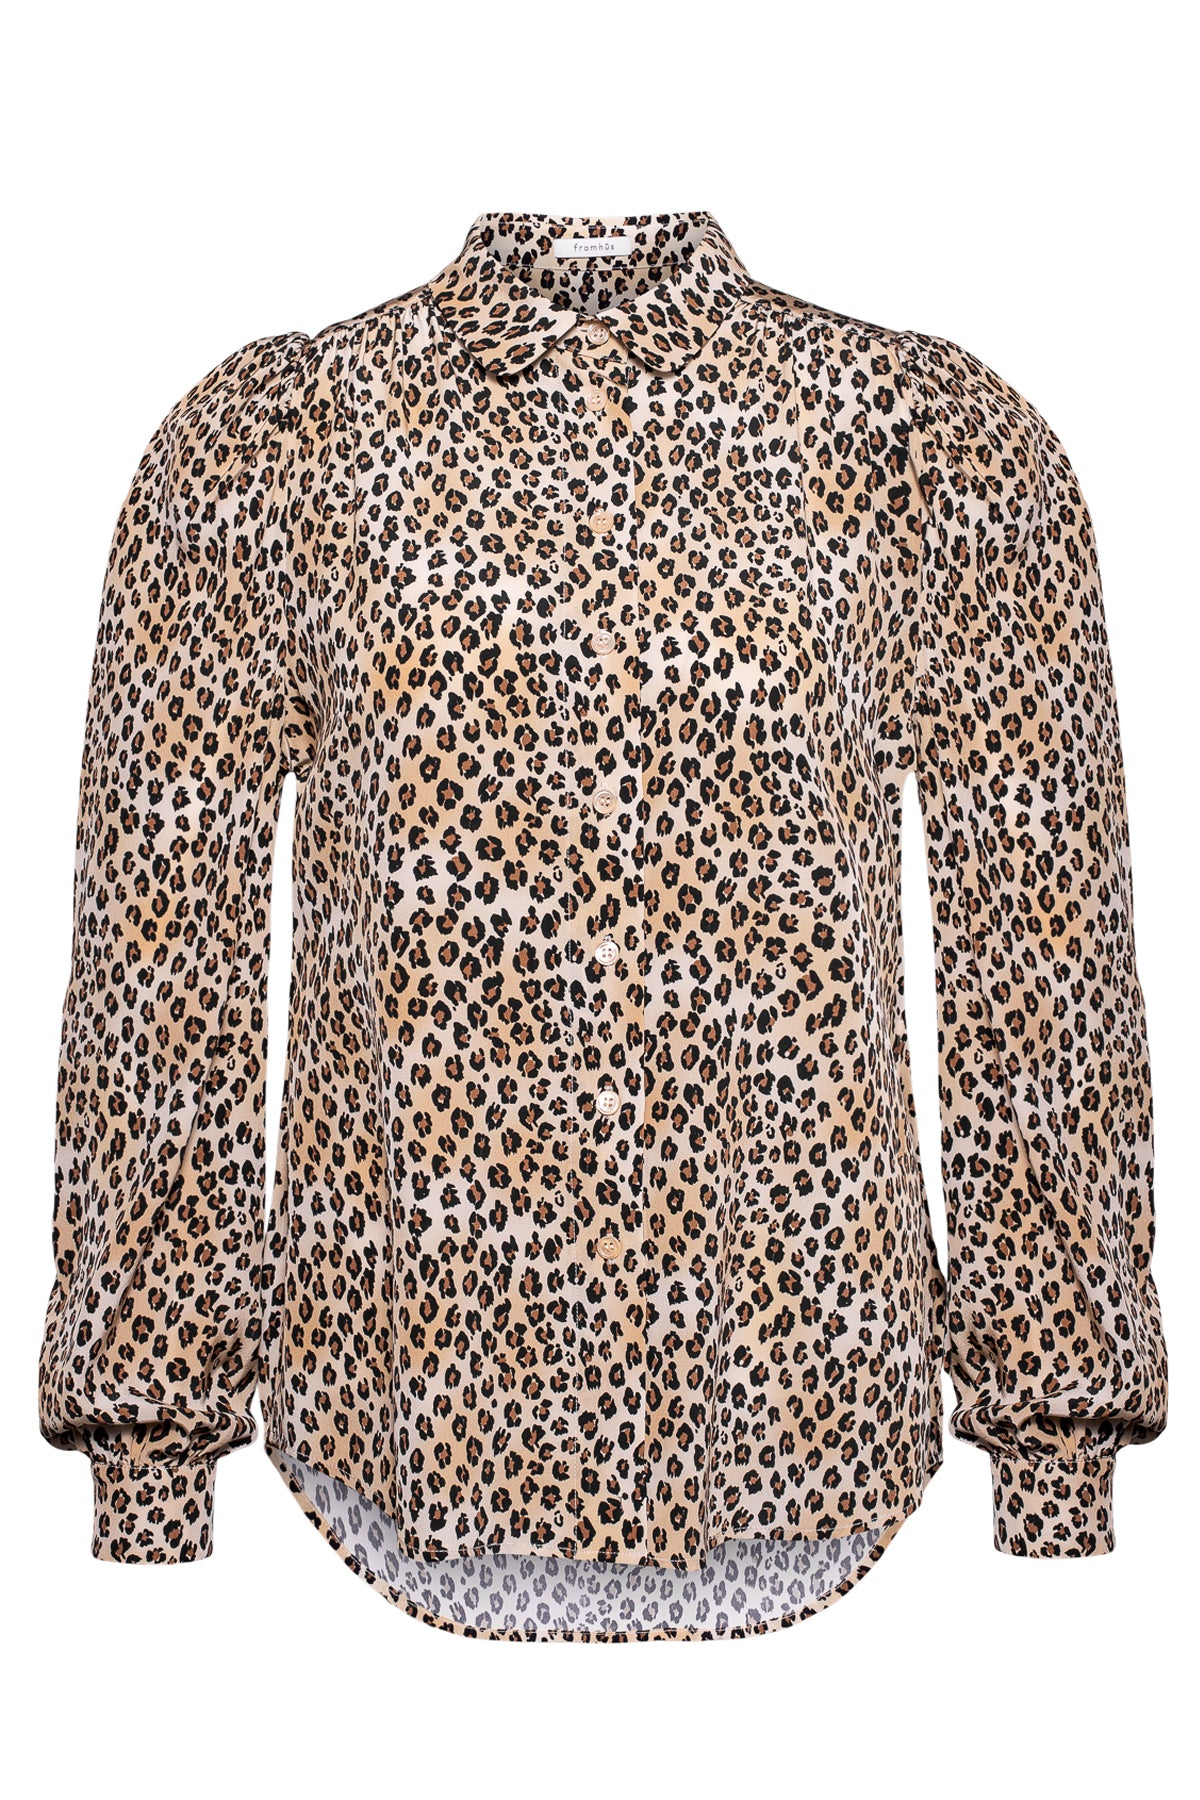 Harper Silk Blouse - Leopard